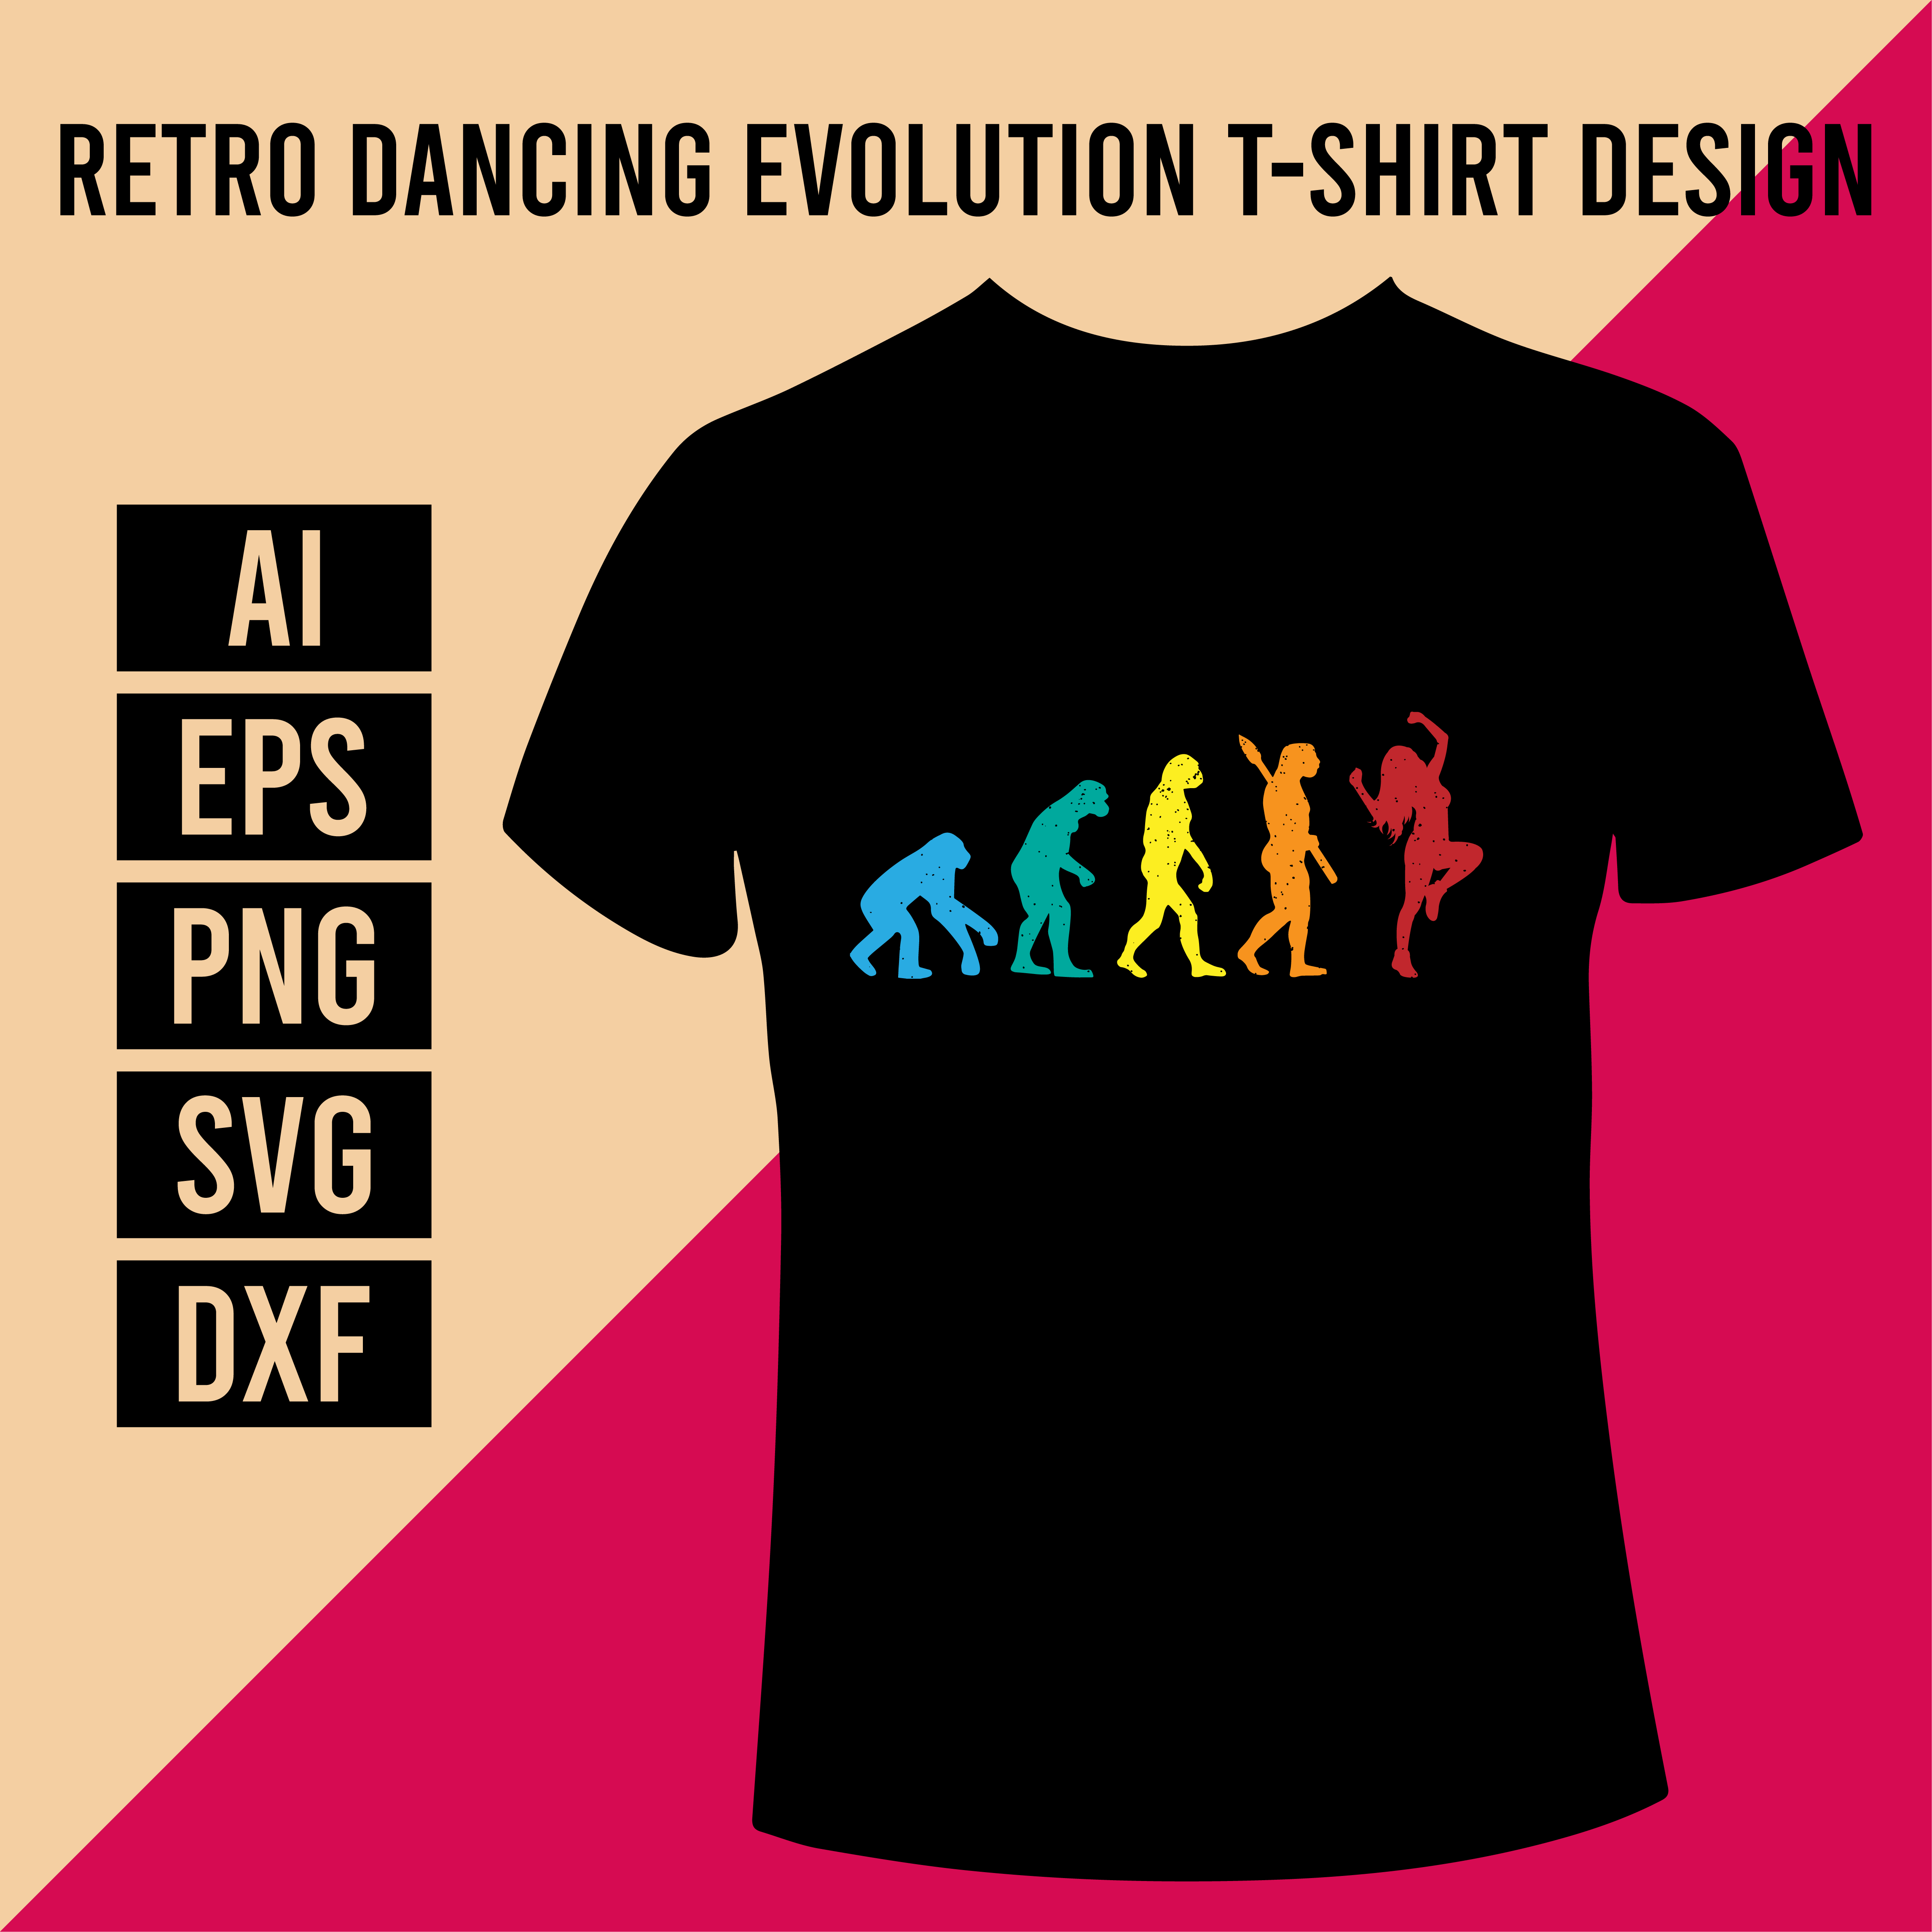 Retro Dancing Evolution T-Shirt Design cover image.